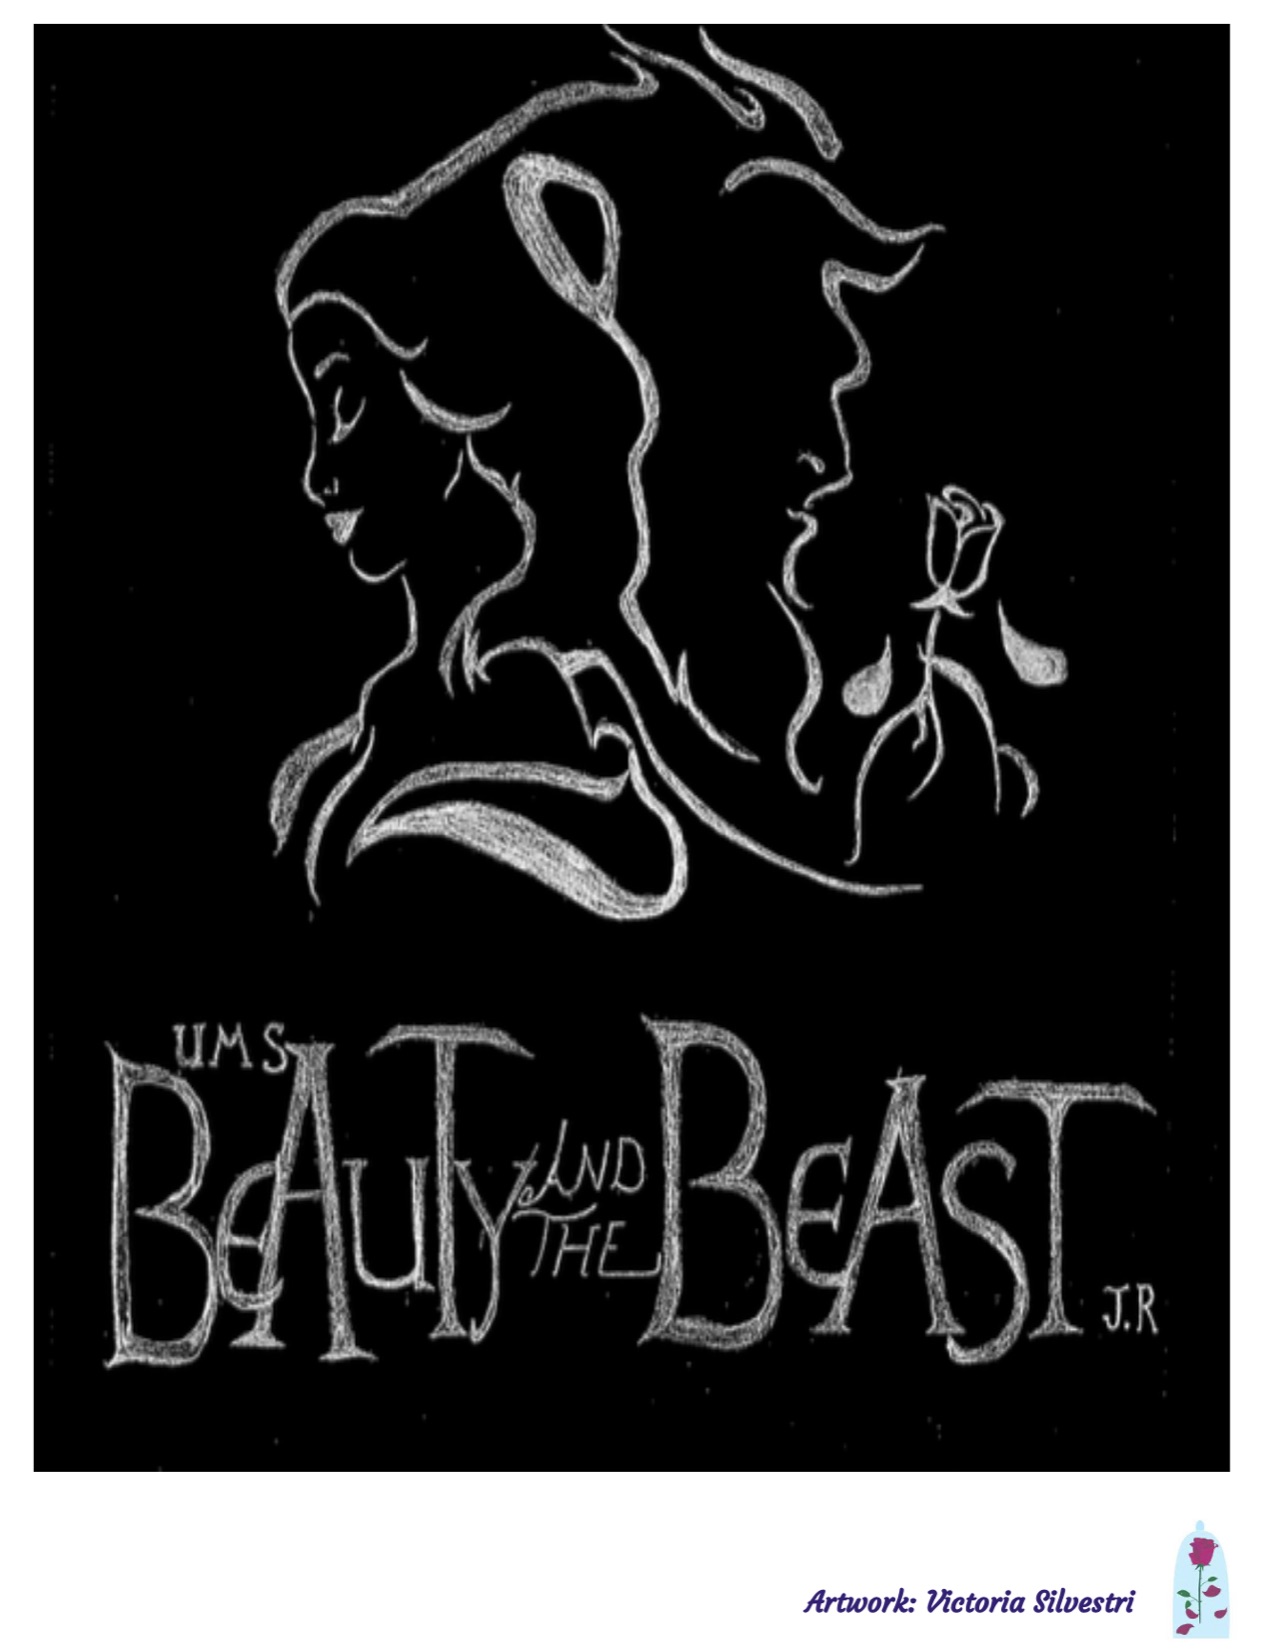 UMS Beauty and the Beast